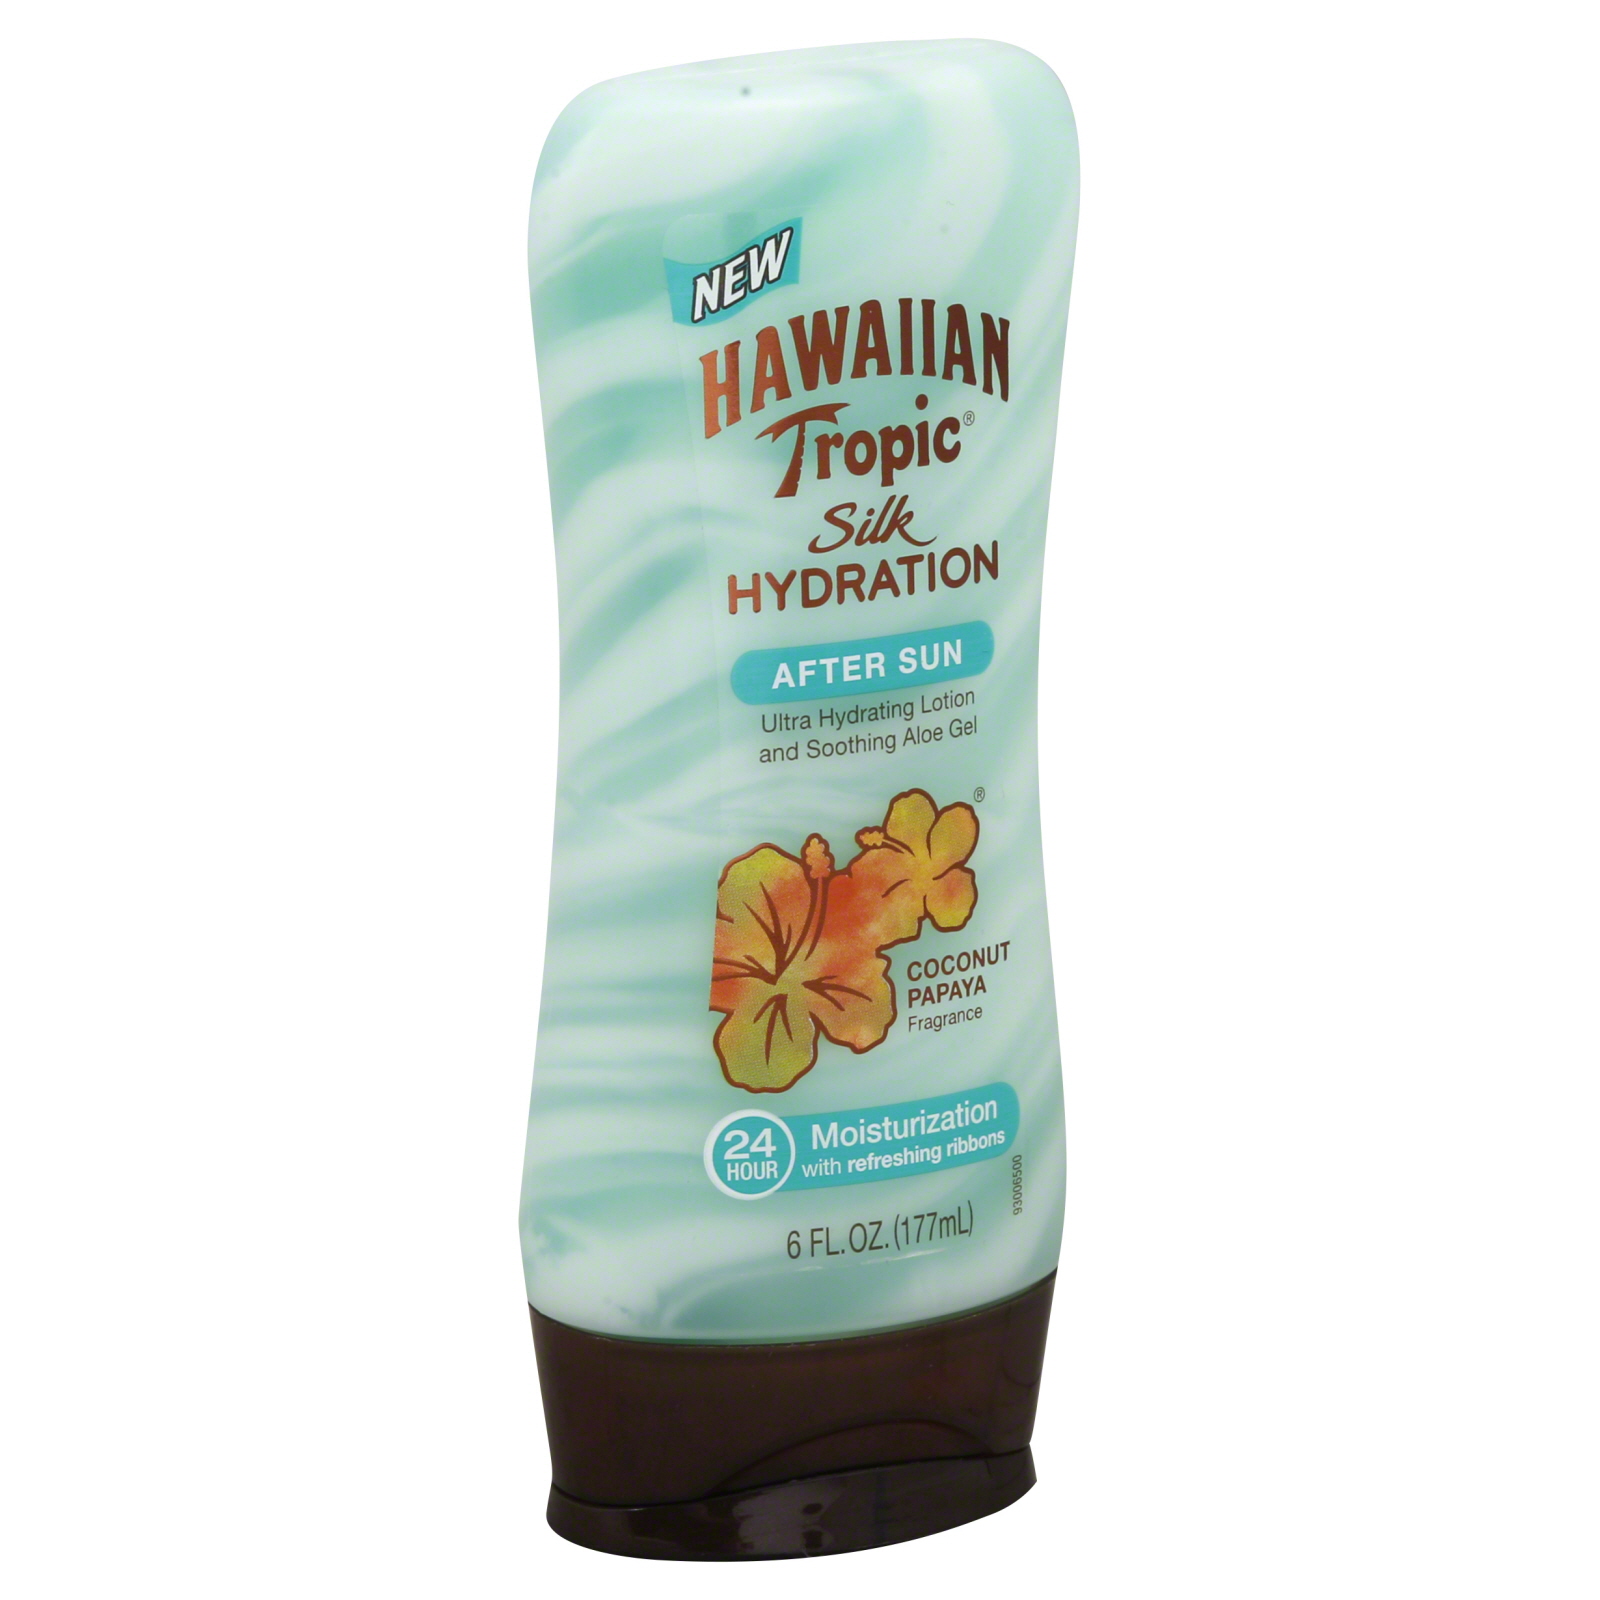 Hawaiian Tropic Silk Hydration After Sun Lotion, 6 fl oz